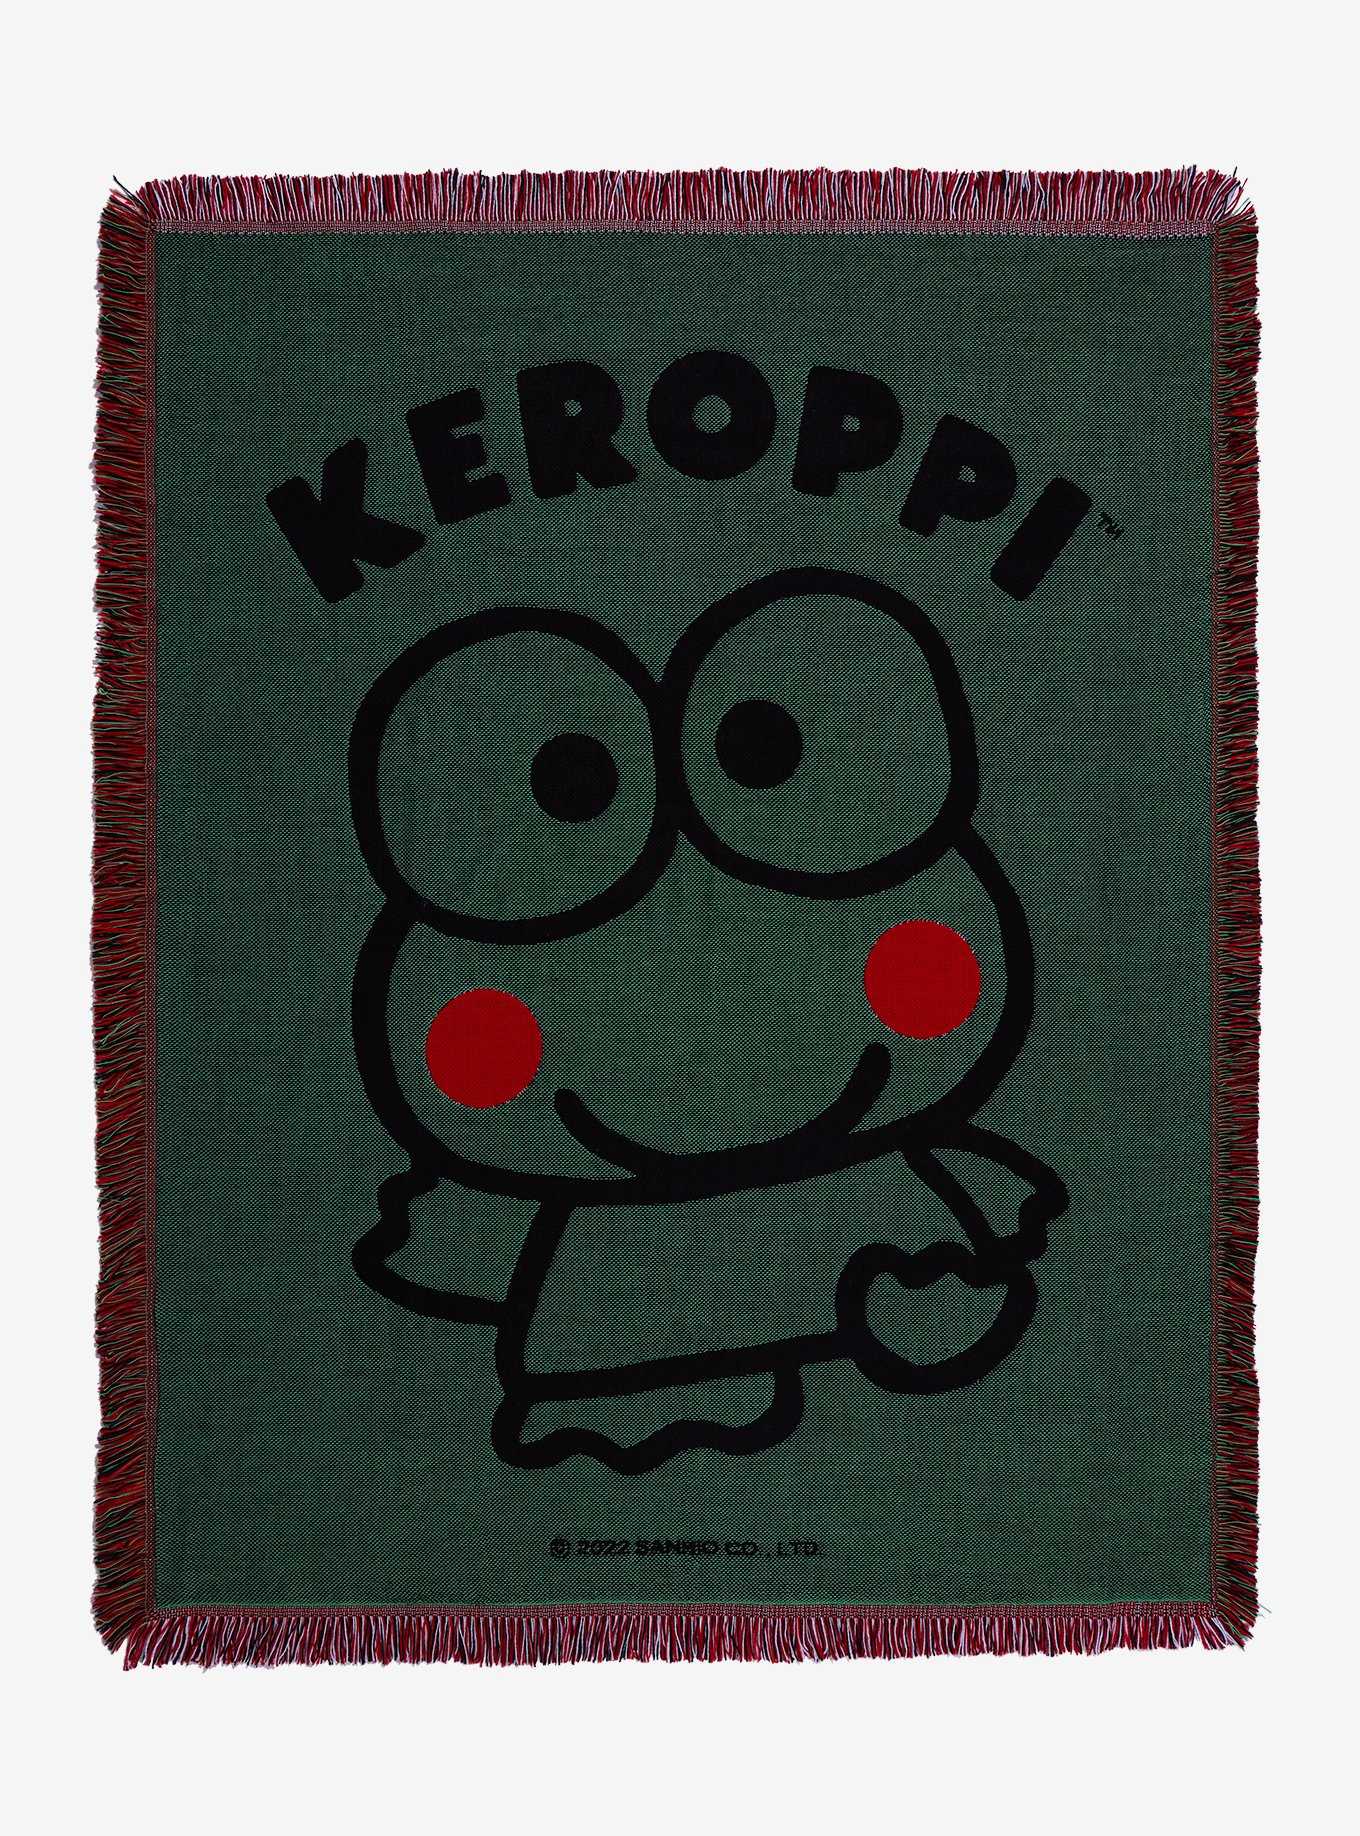 Sanrio Keroppi Jacquard Tapestry Throw, , hi-res